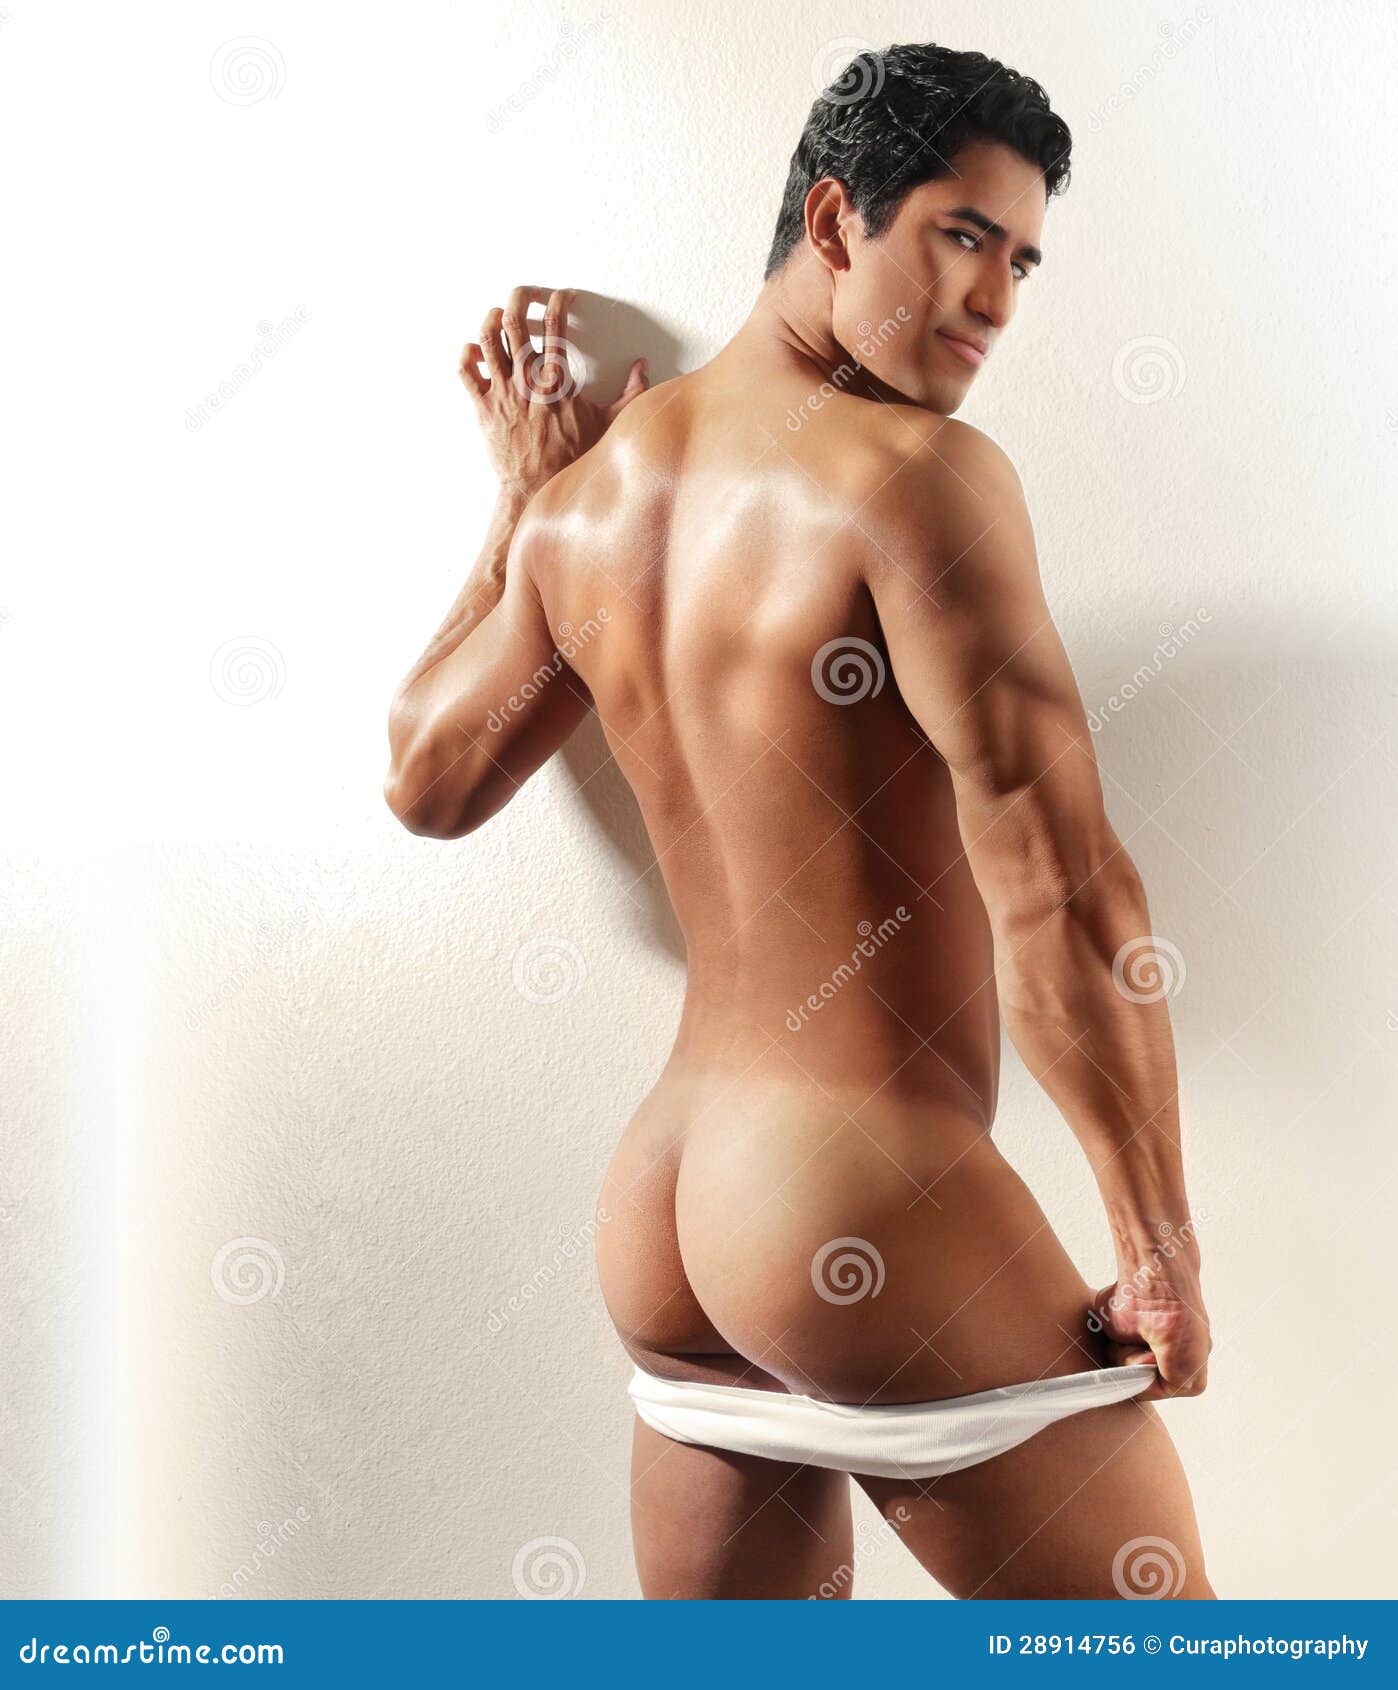 chris dorhout add photo hot male models naked